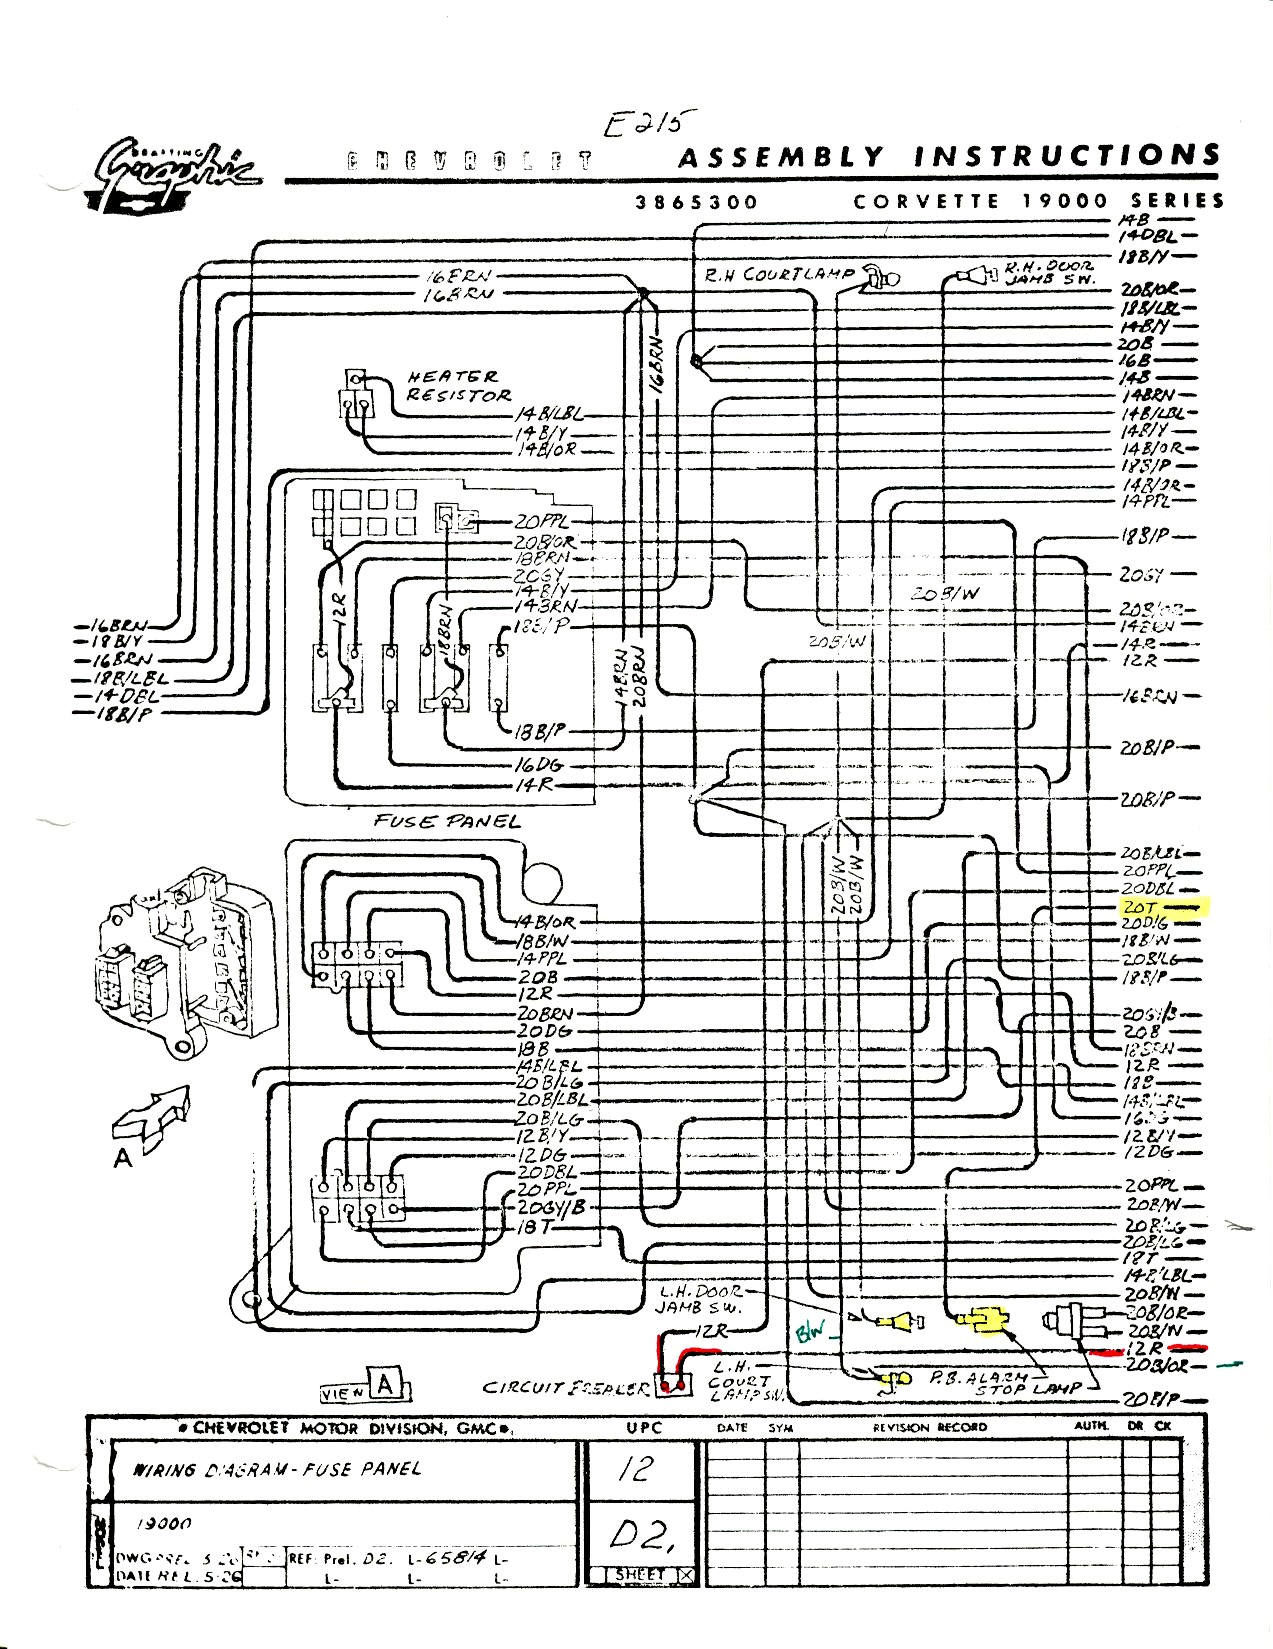 I need a 1965 wiring diagram - CorvetteForum - Chevrolet ... 1965 corvette fuse box wiring 